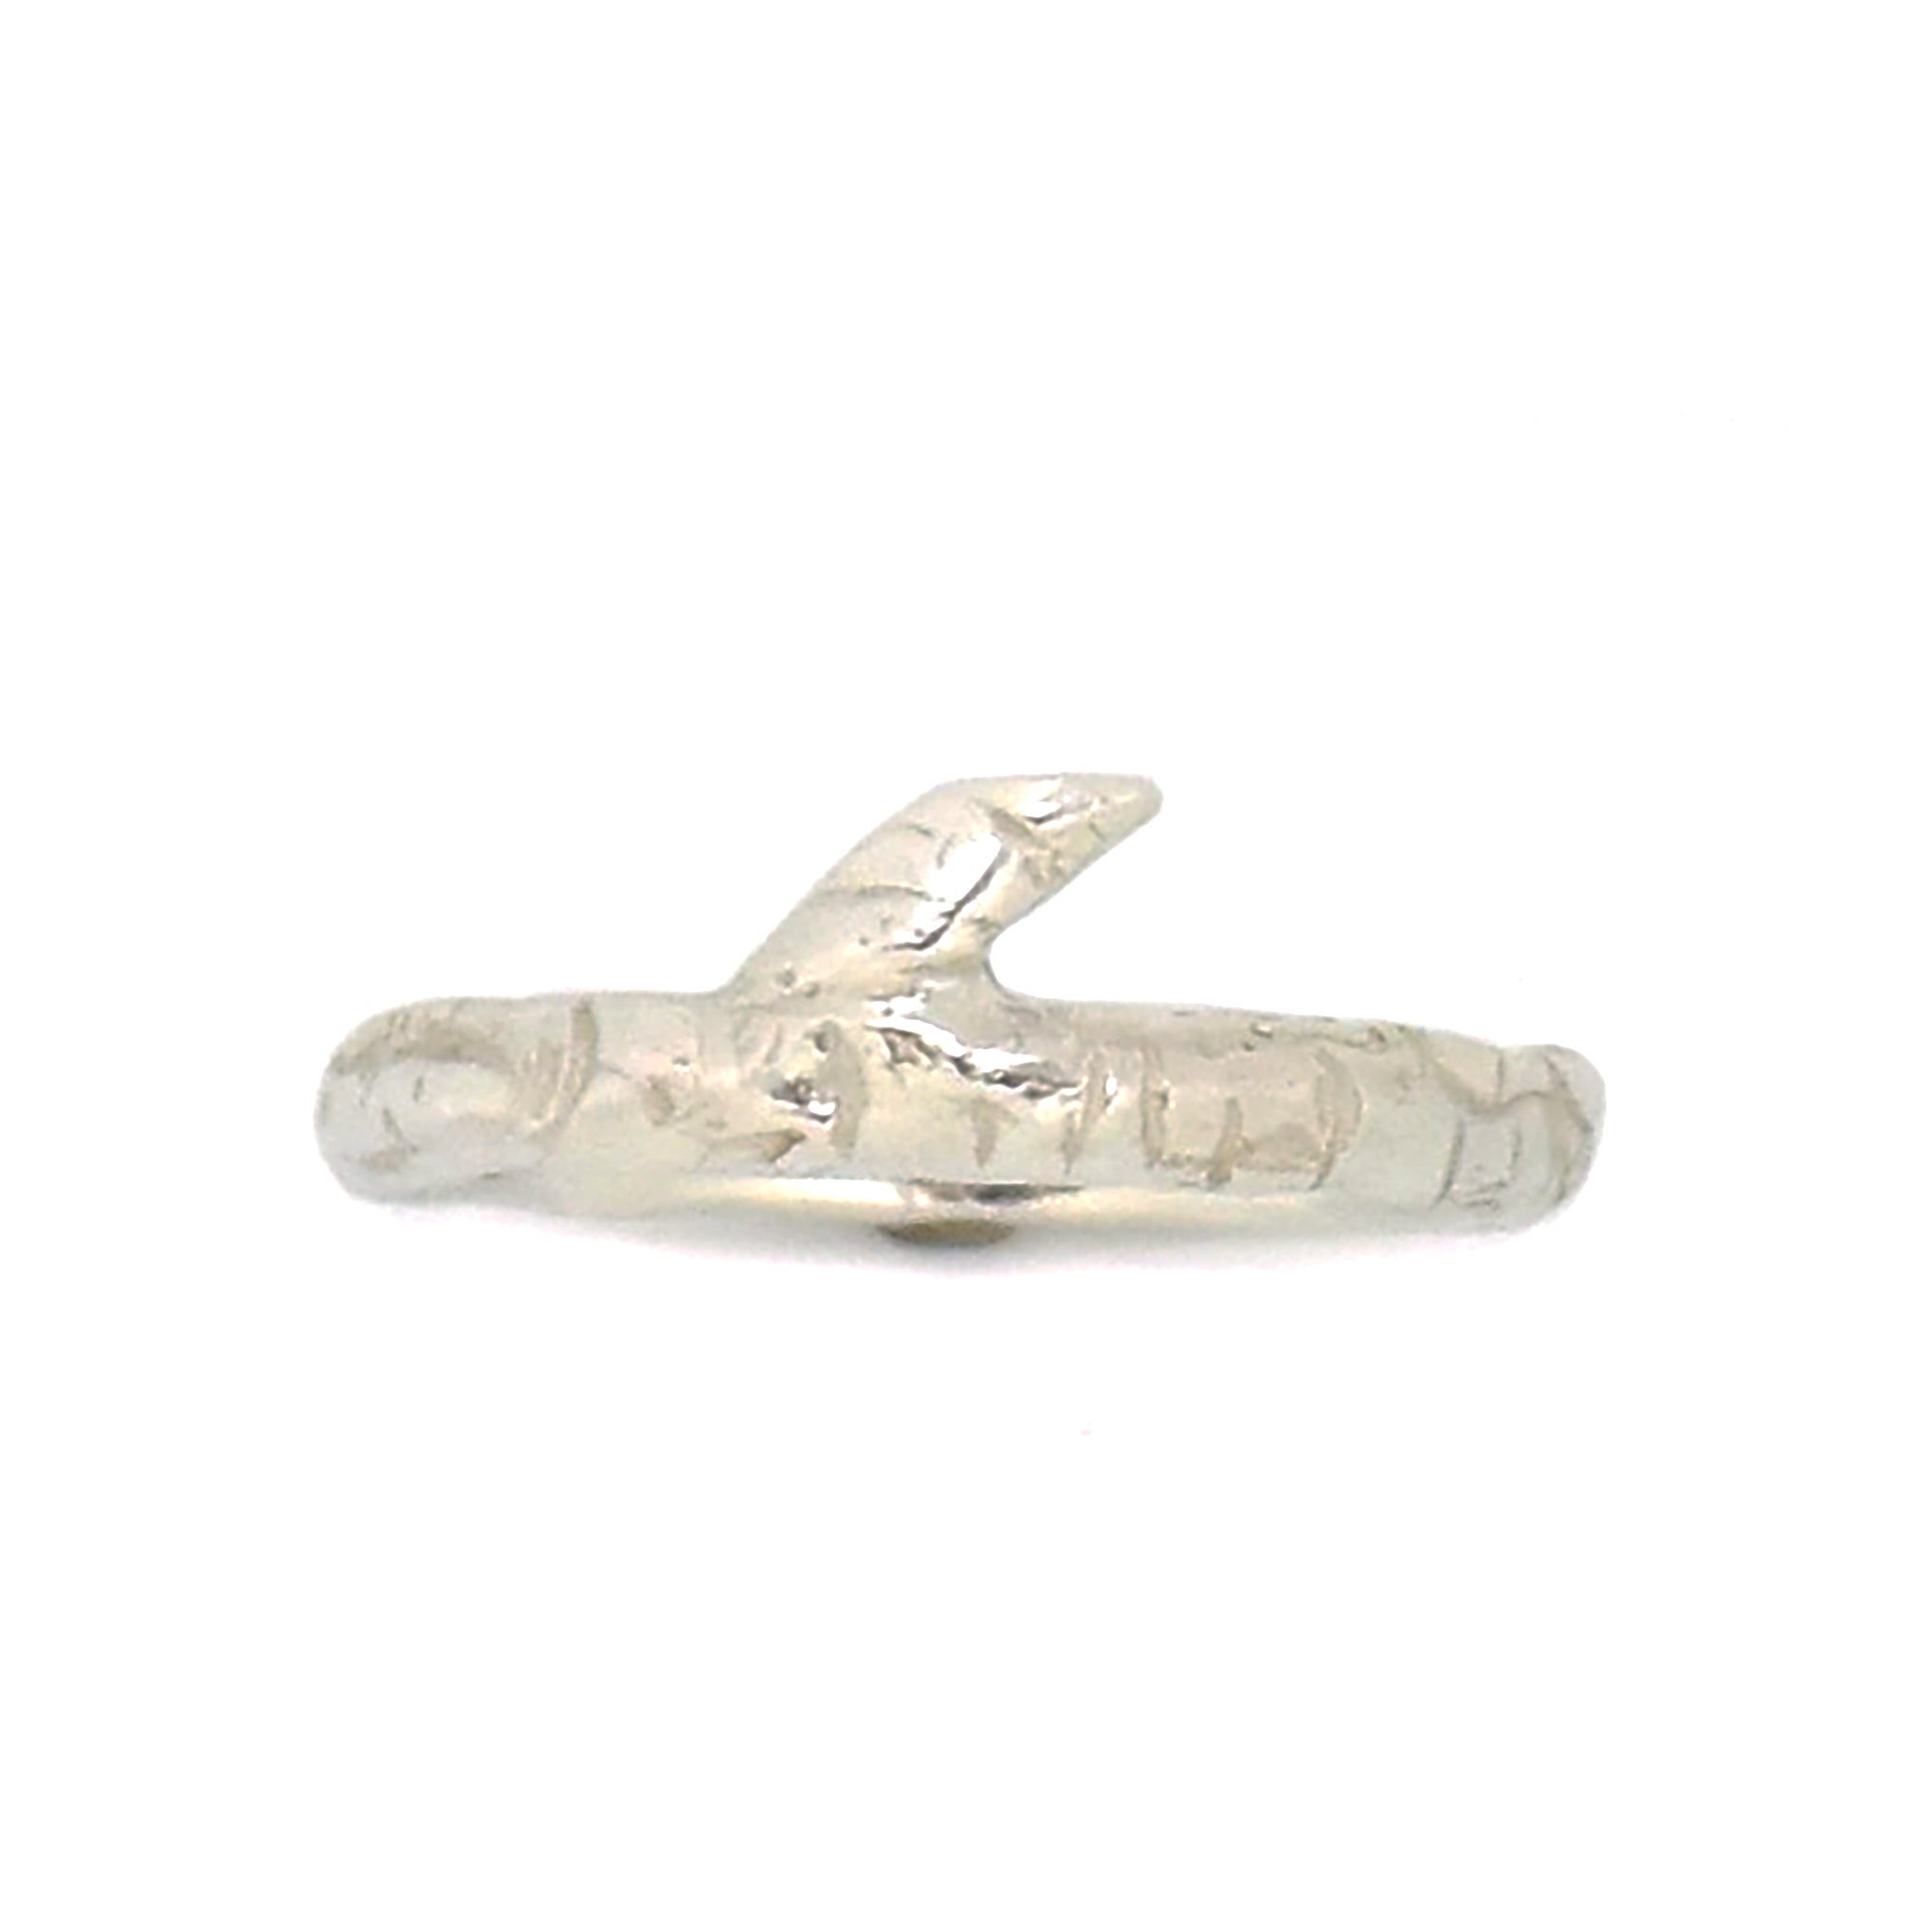 Gold Birch Branch Ring - your choice of gold - Wedding Ring 14K Rose Gold 18K Palladium White Gold 6357 - handmade by Beth Millner Jewelry